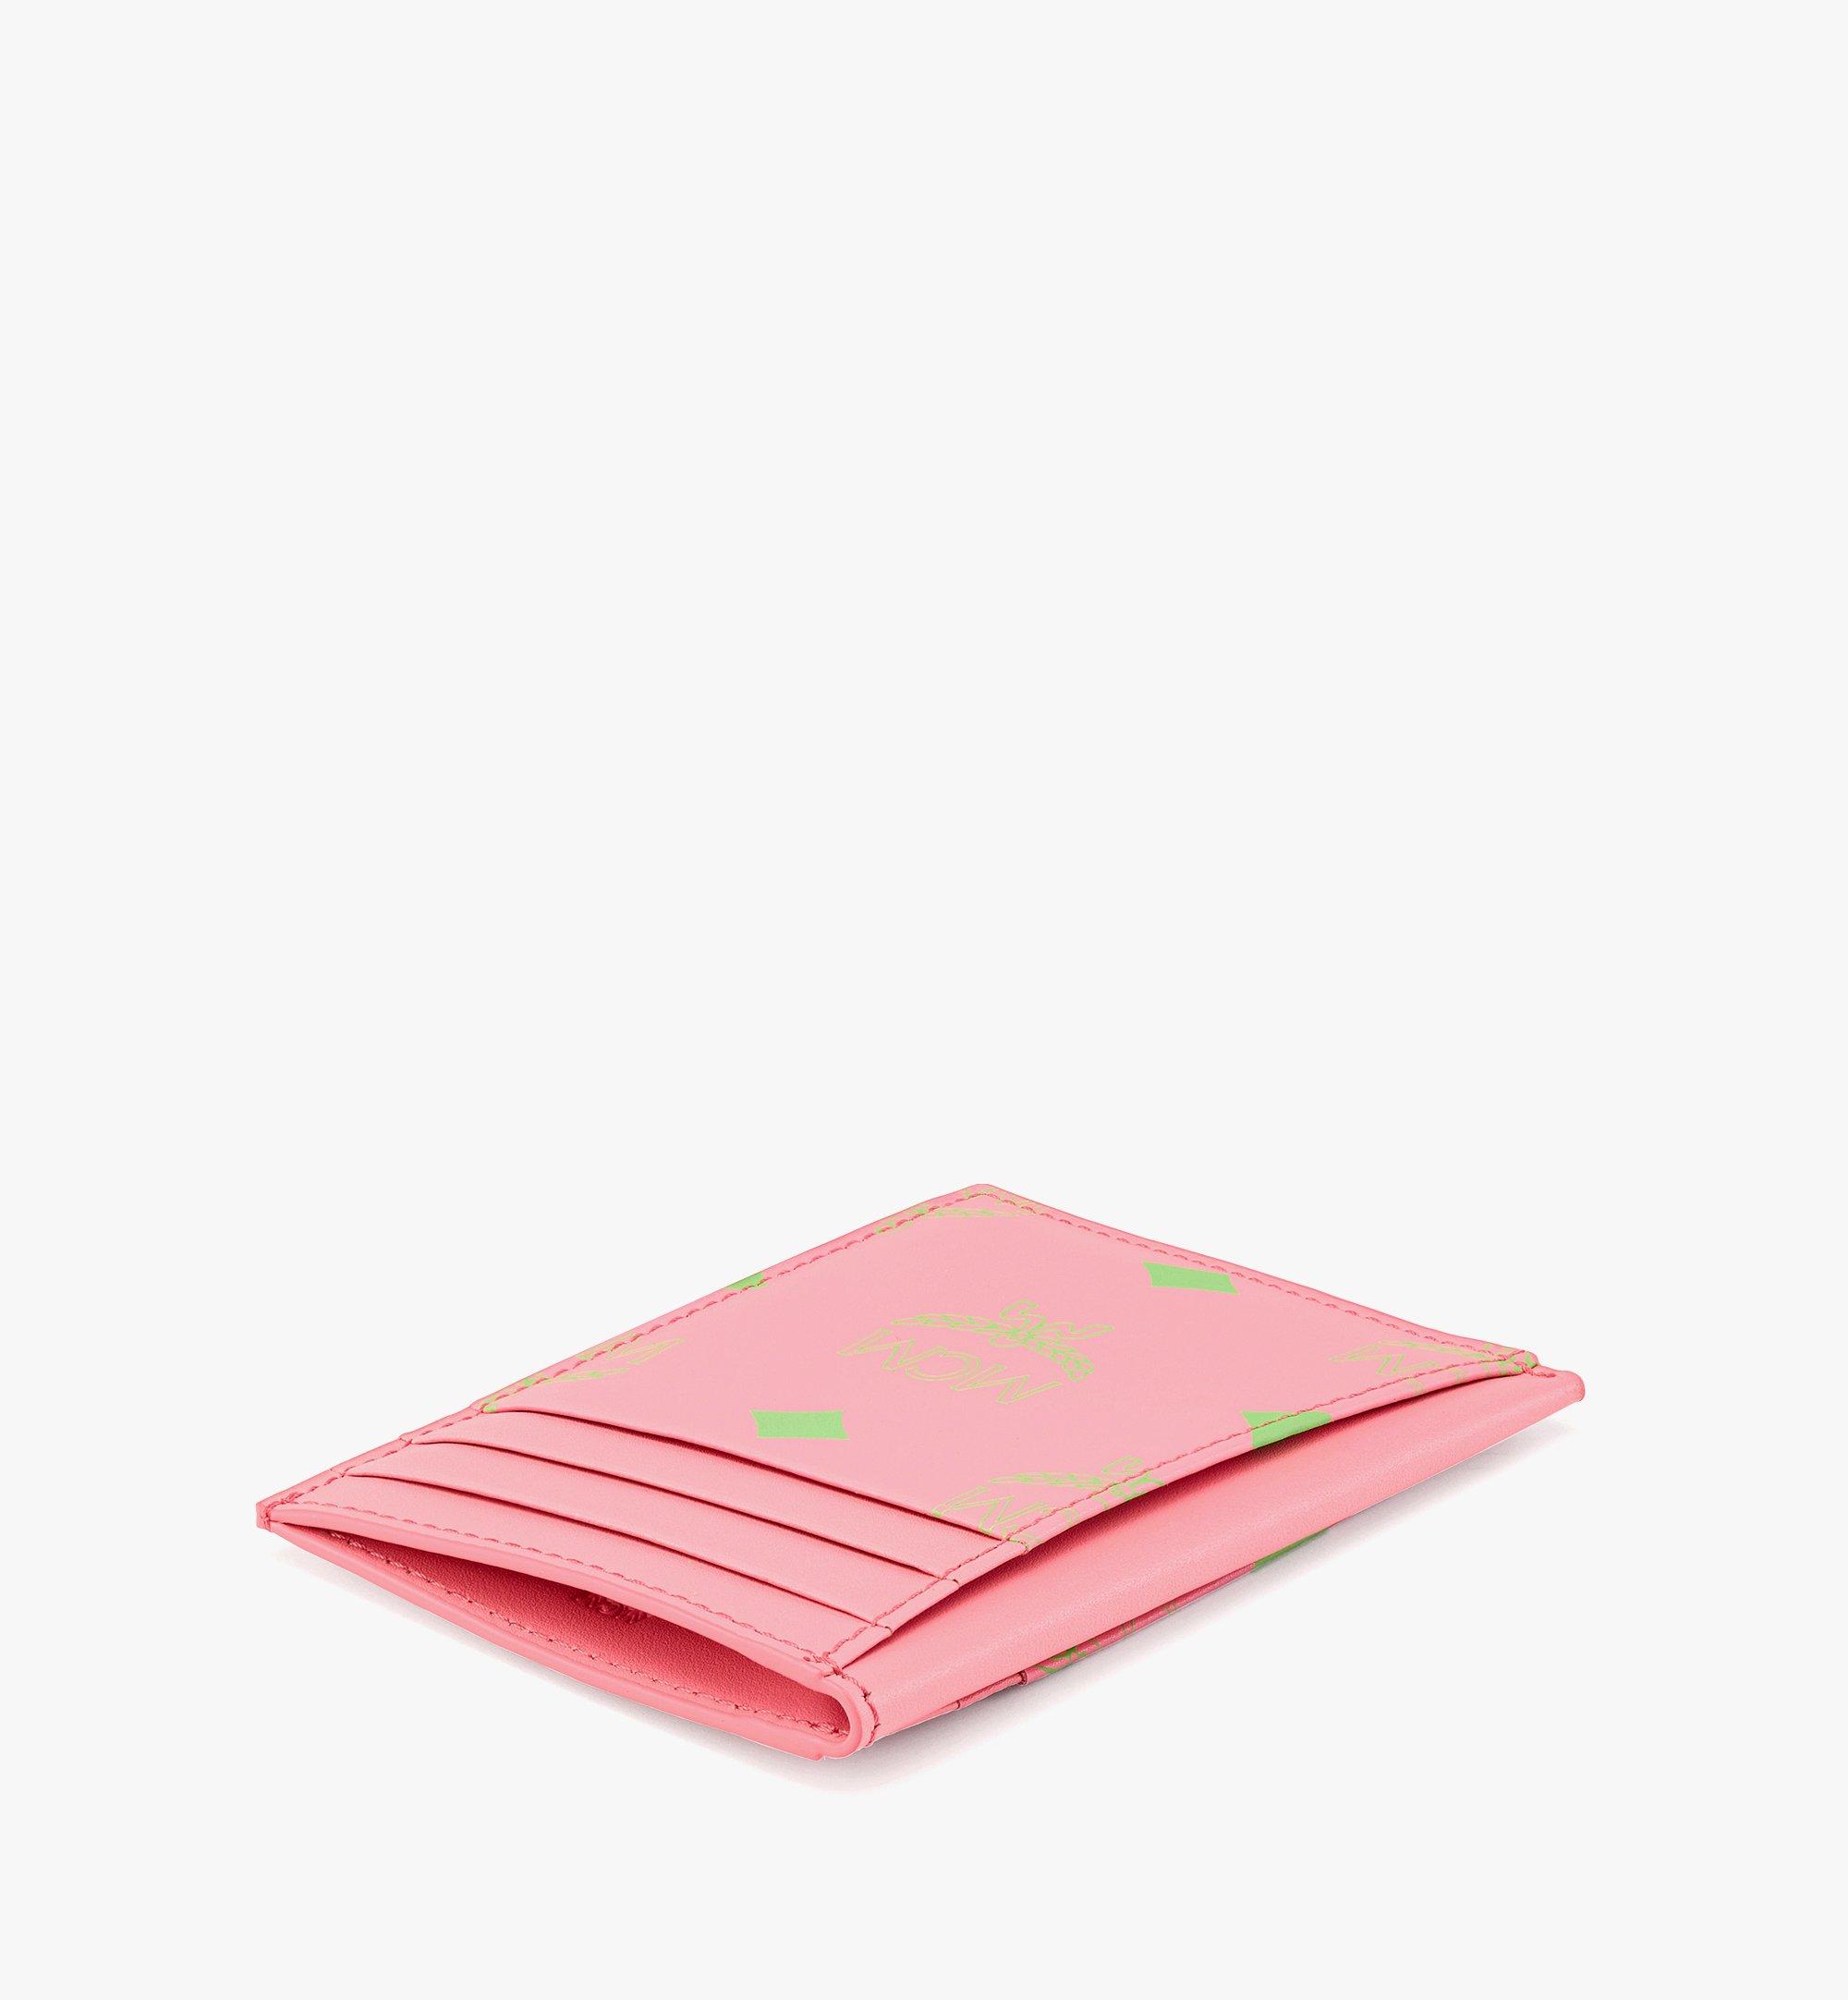 MCM N/S Card Case in Color Splash Logo Leather Pink MXACSSX01QV001 Alternate View 1